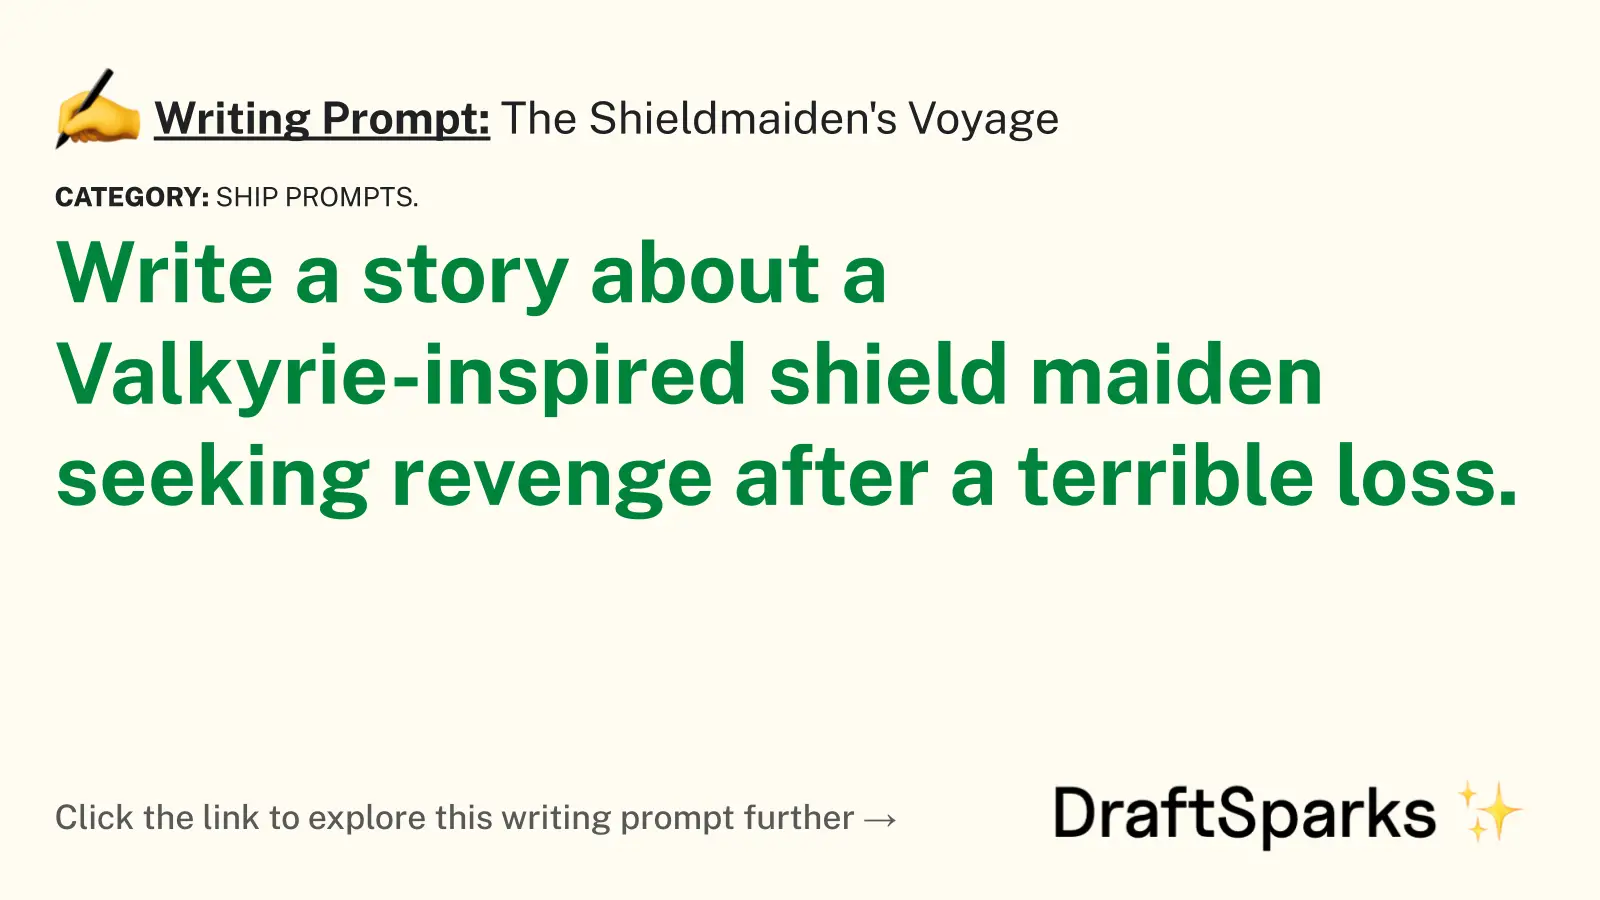 The Shieldmaiden’s Voyage